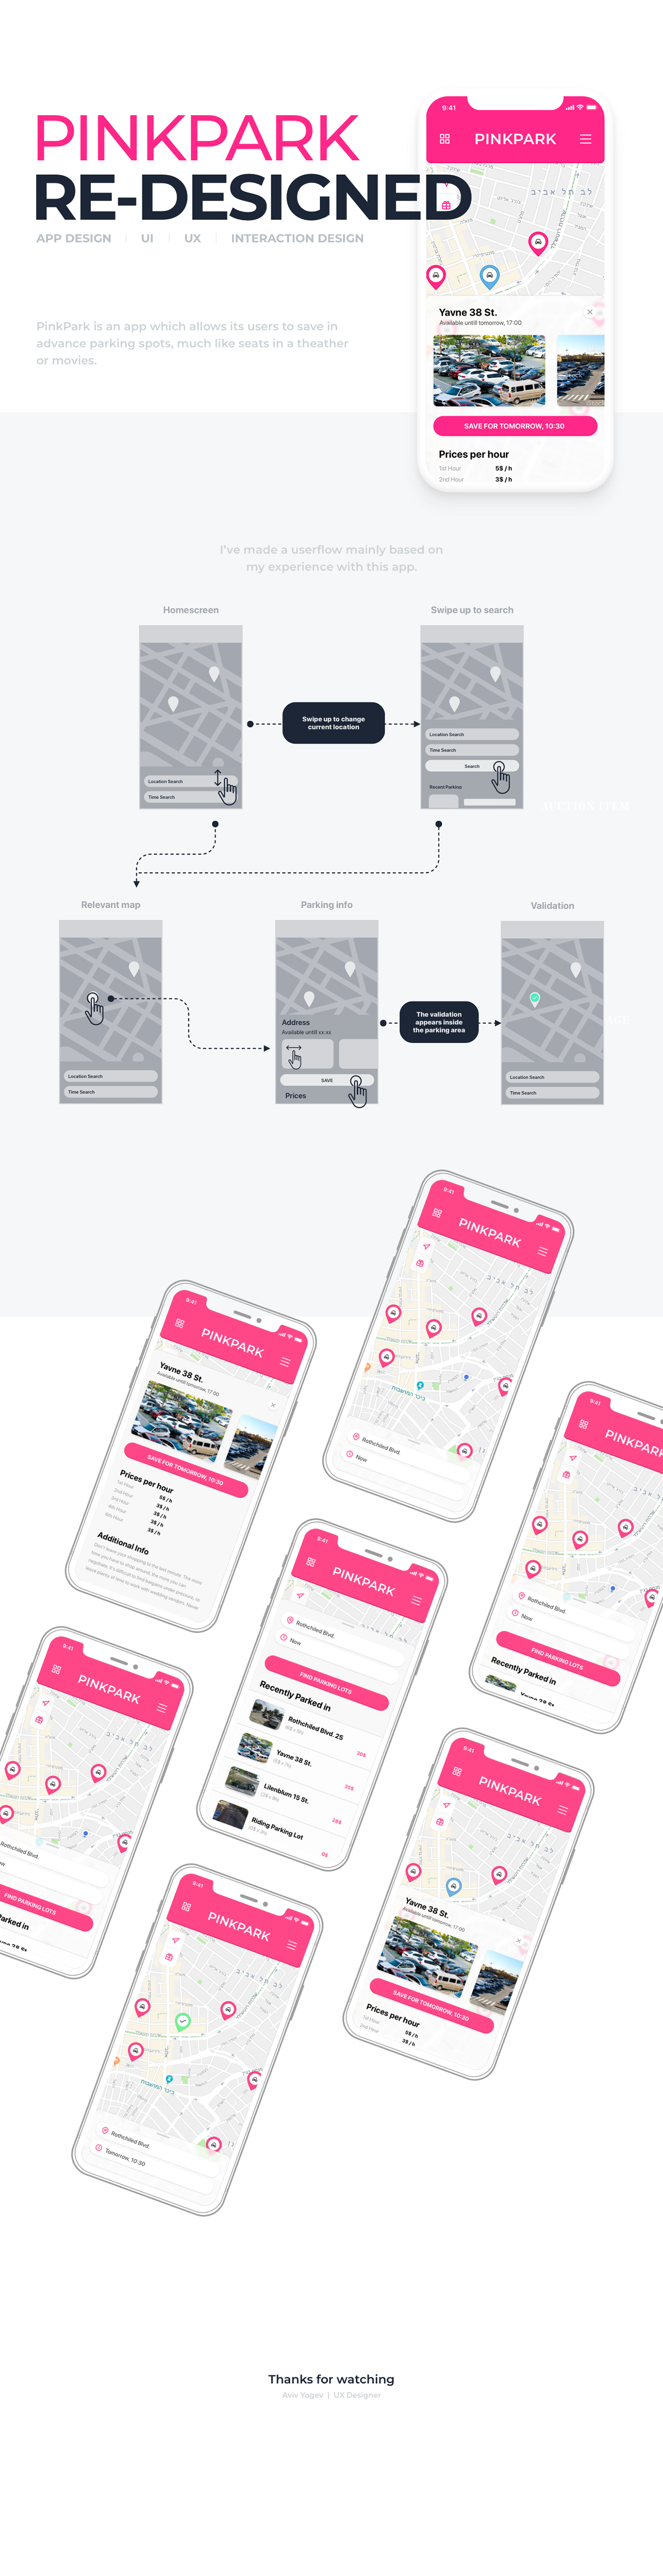 mobile applications app UI ux re-design